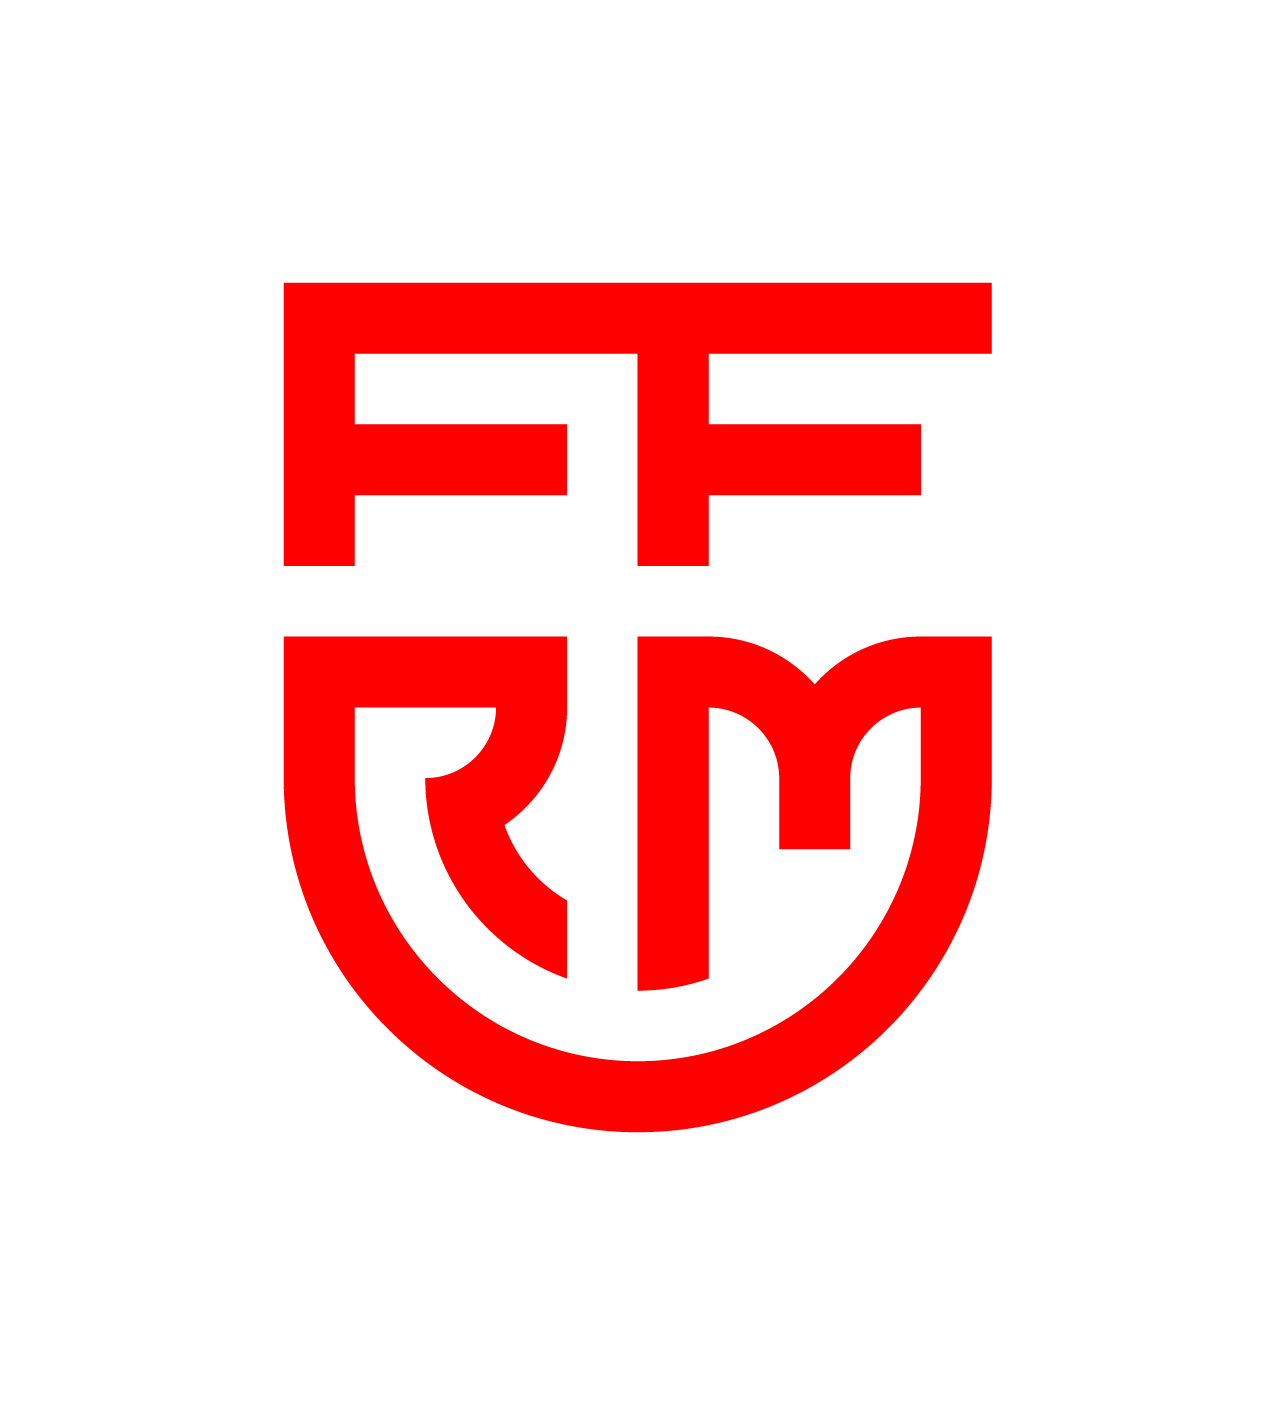 Real federación murciana de fútbol